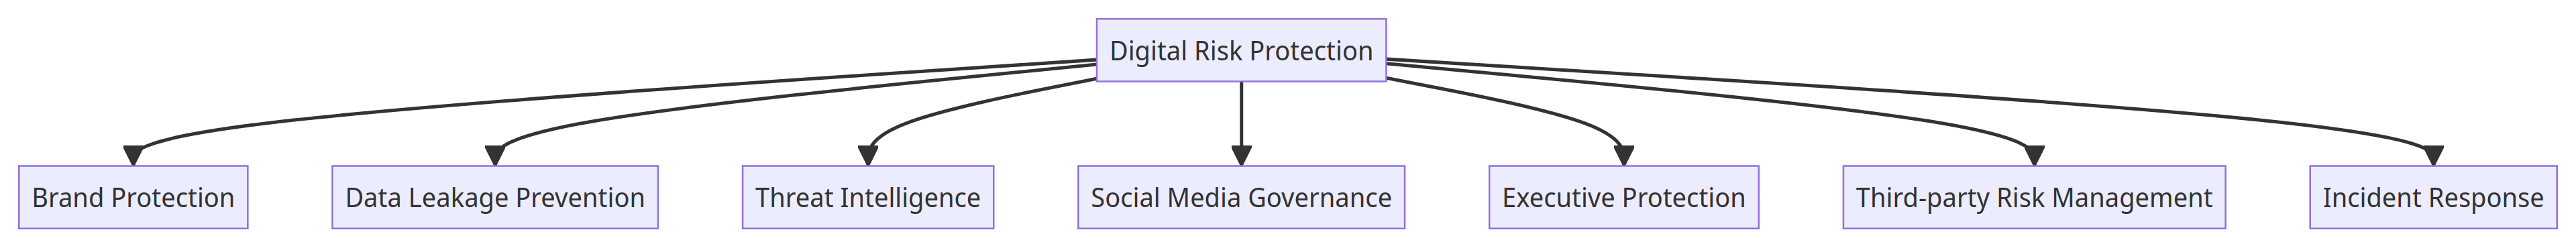 Digital Risk Protection (DRP)